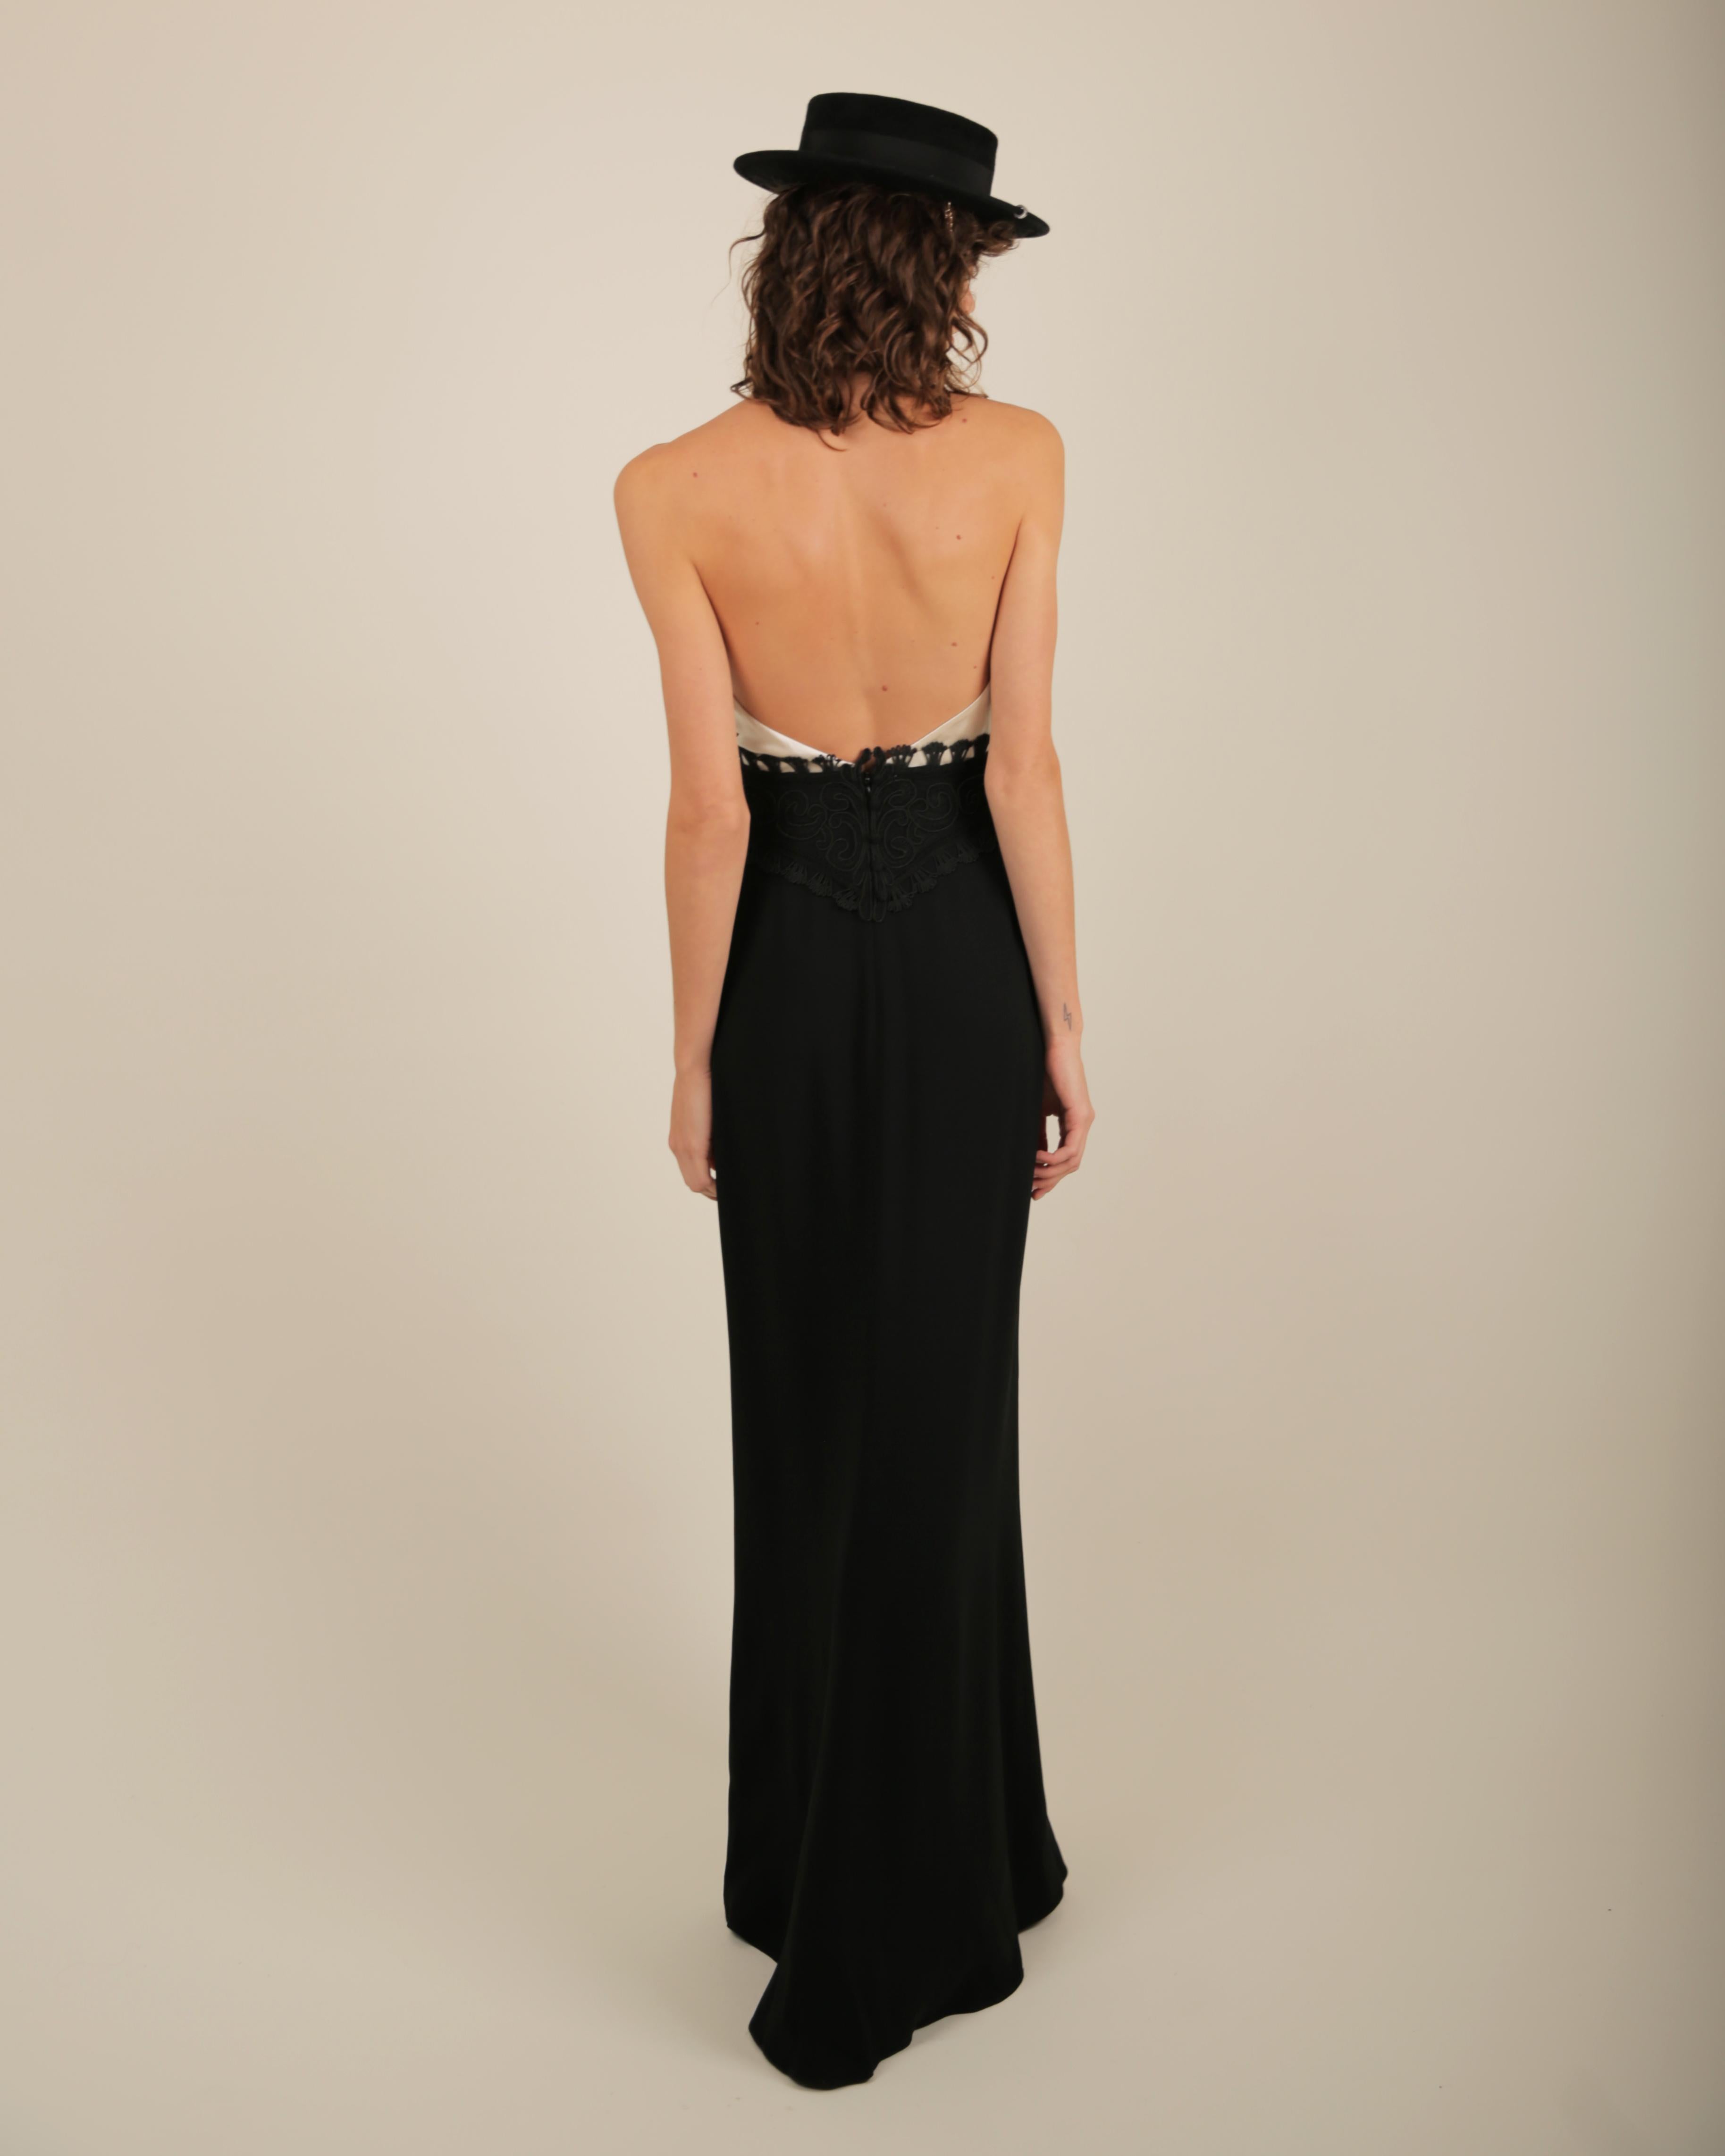 Ralph Lauren SS 2013 black white sleeveless halter backless button up dress gown For Sale 7